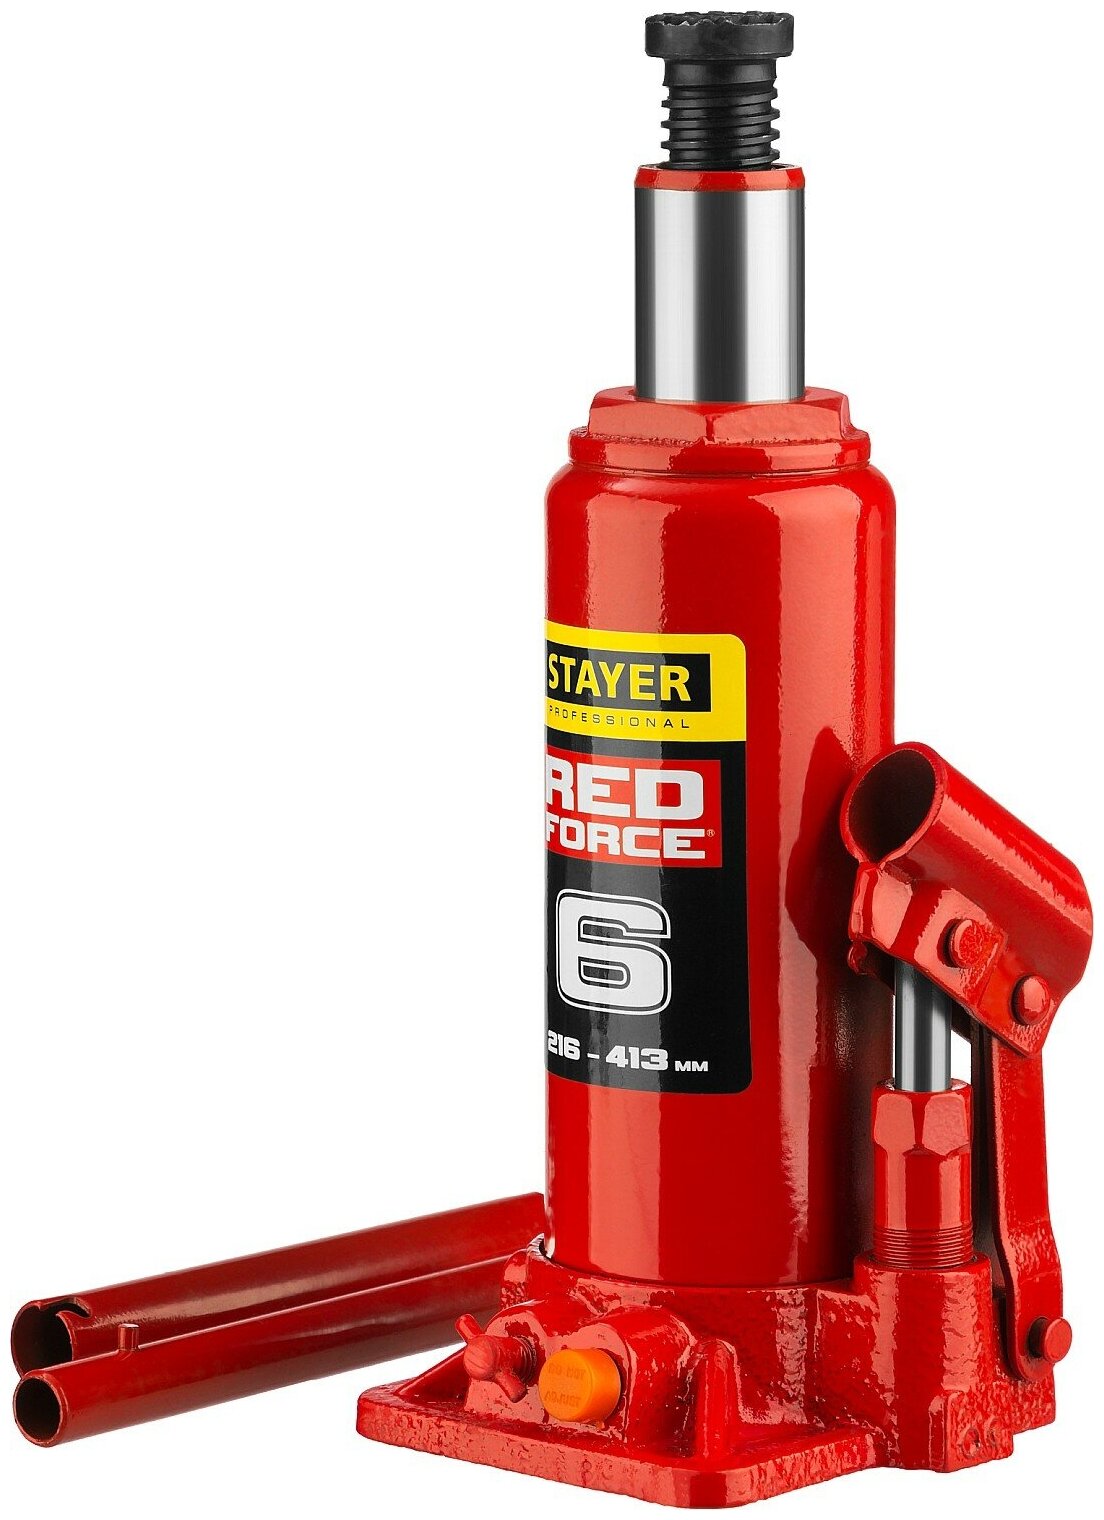 STAYER RED FORCE, 6 т, 216 - 413 мм, бутылочный гидравлический домкрат, Professional (43160-6)